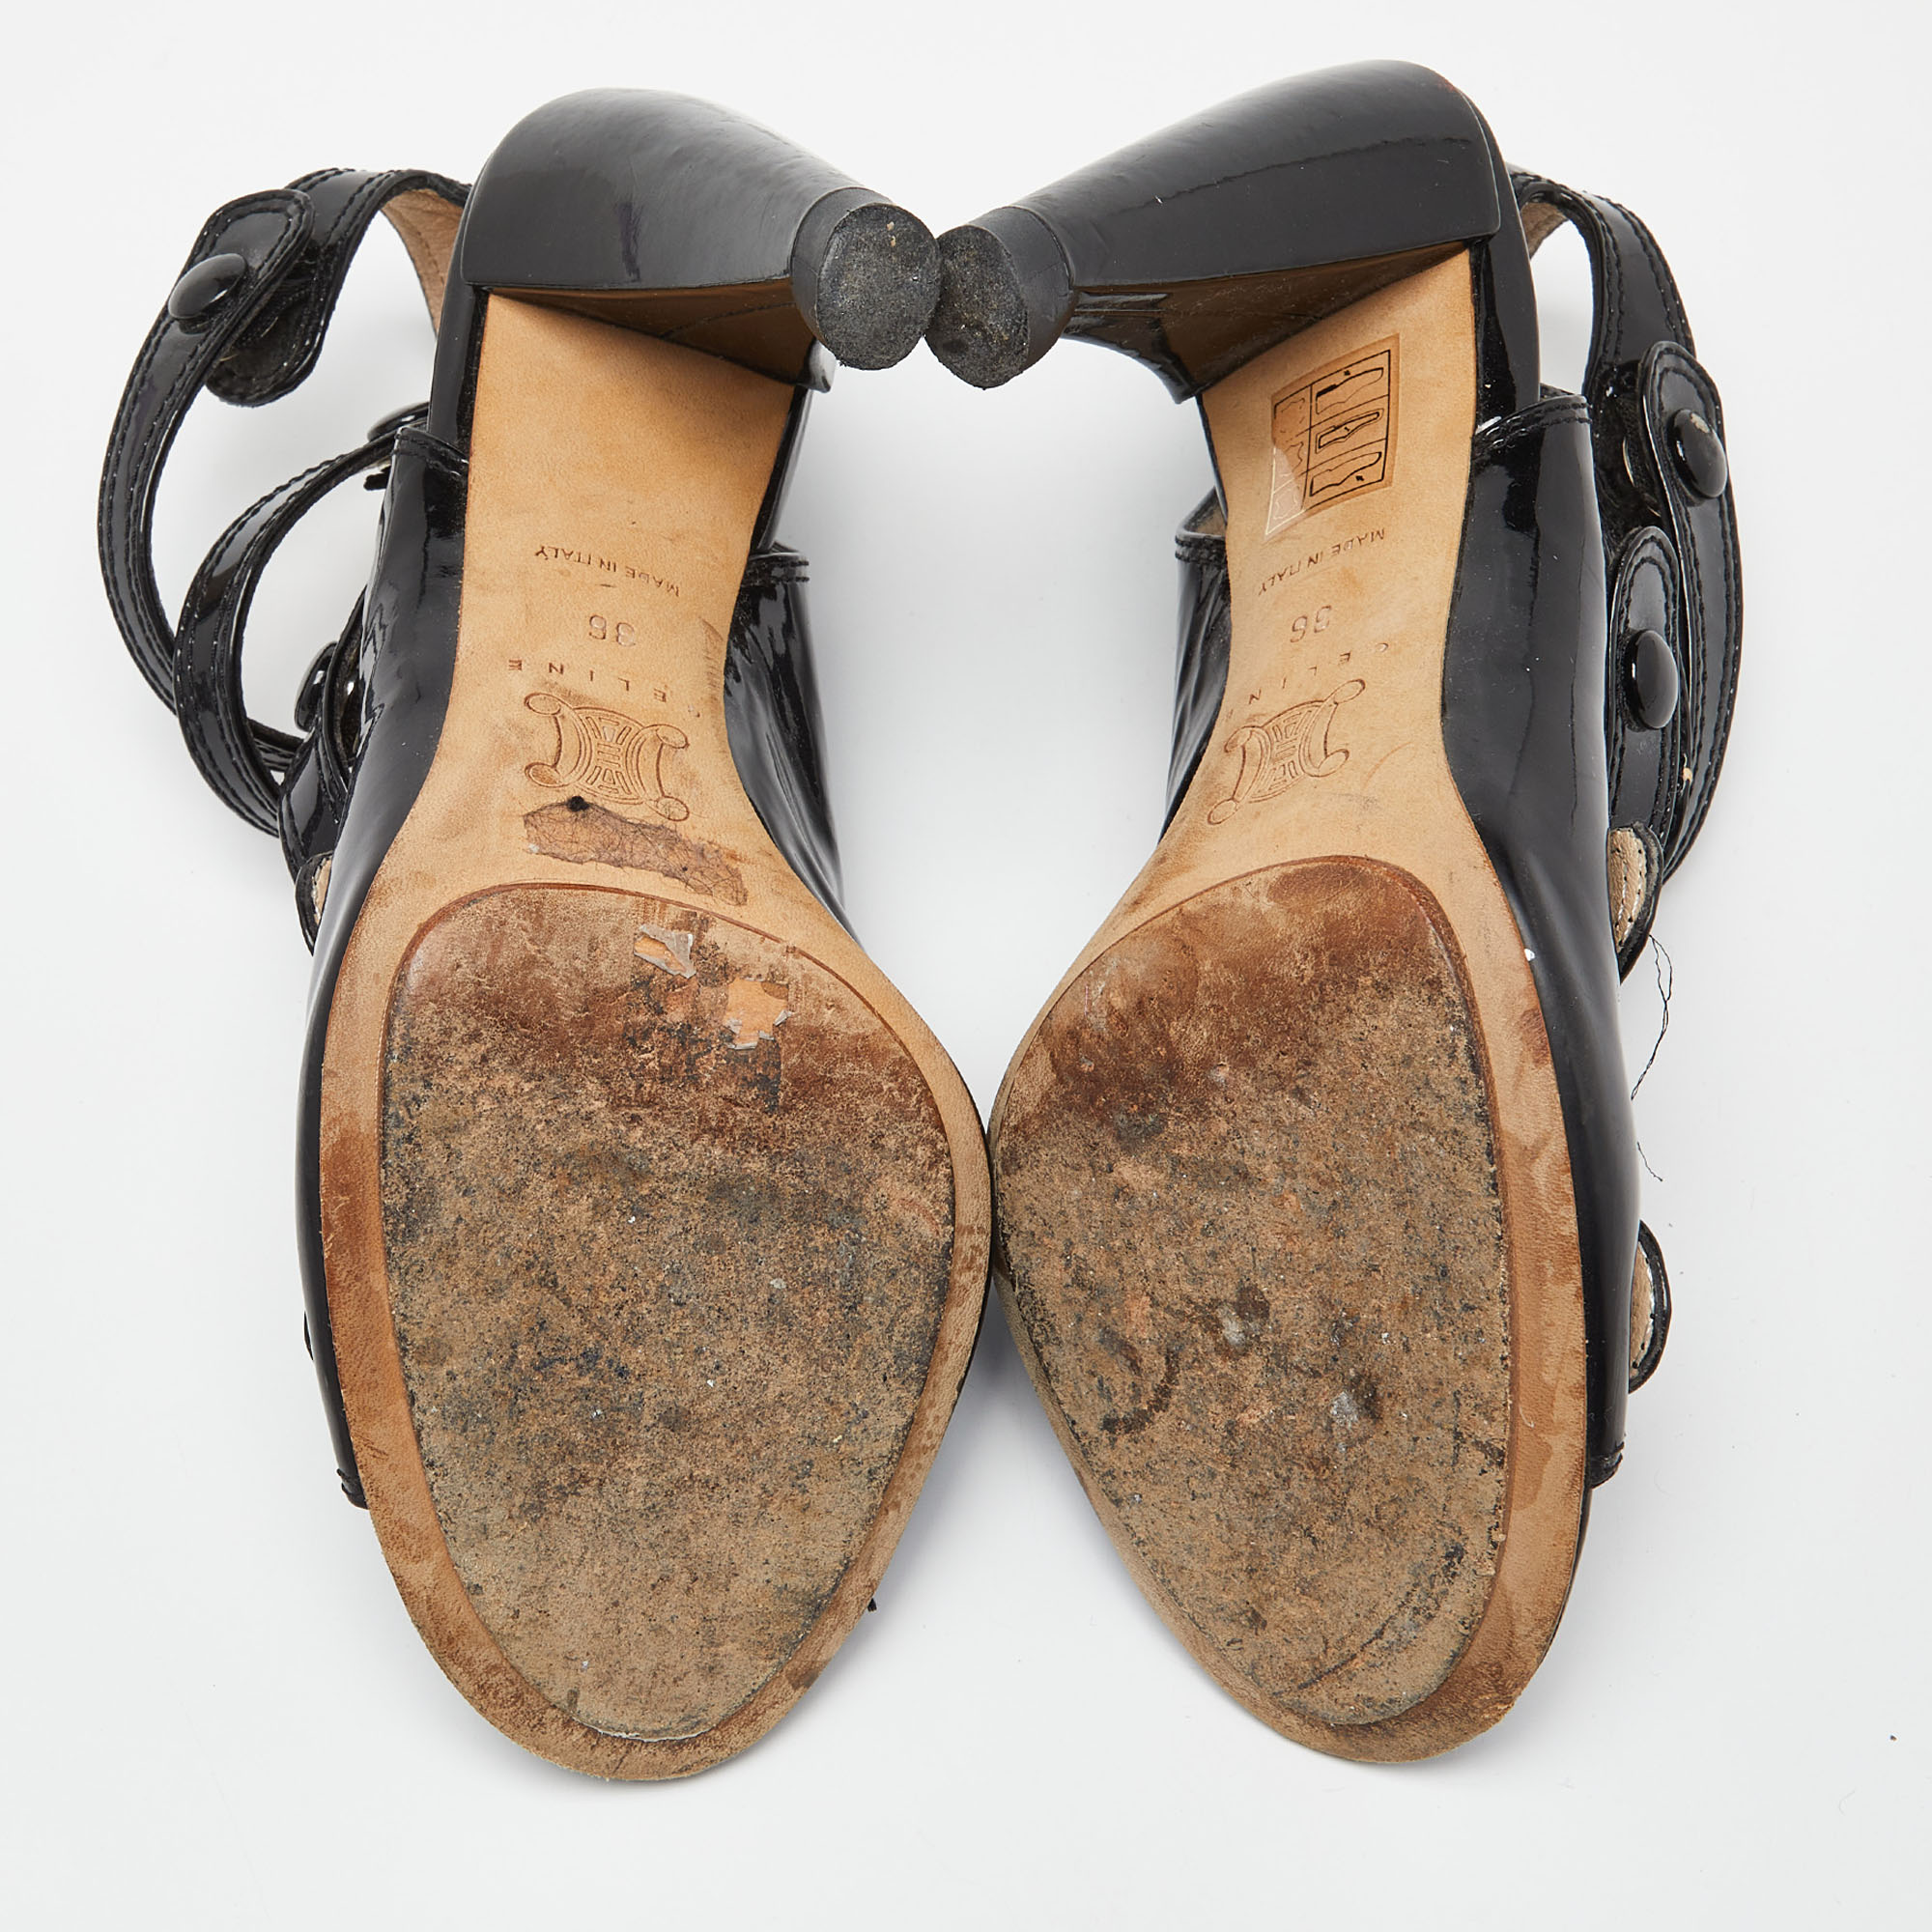 Celine Black Patent Leather Strappy Sandals Size 36